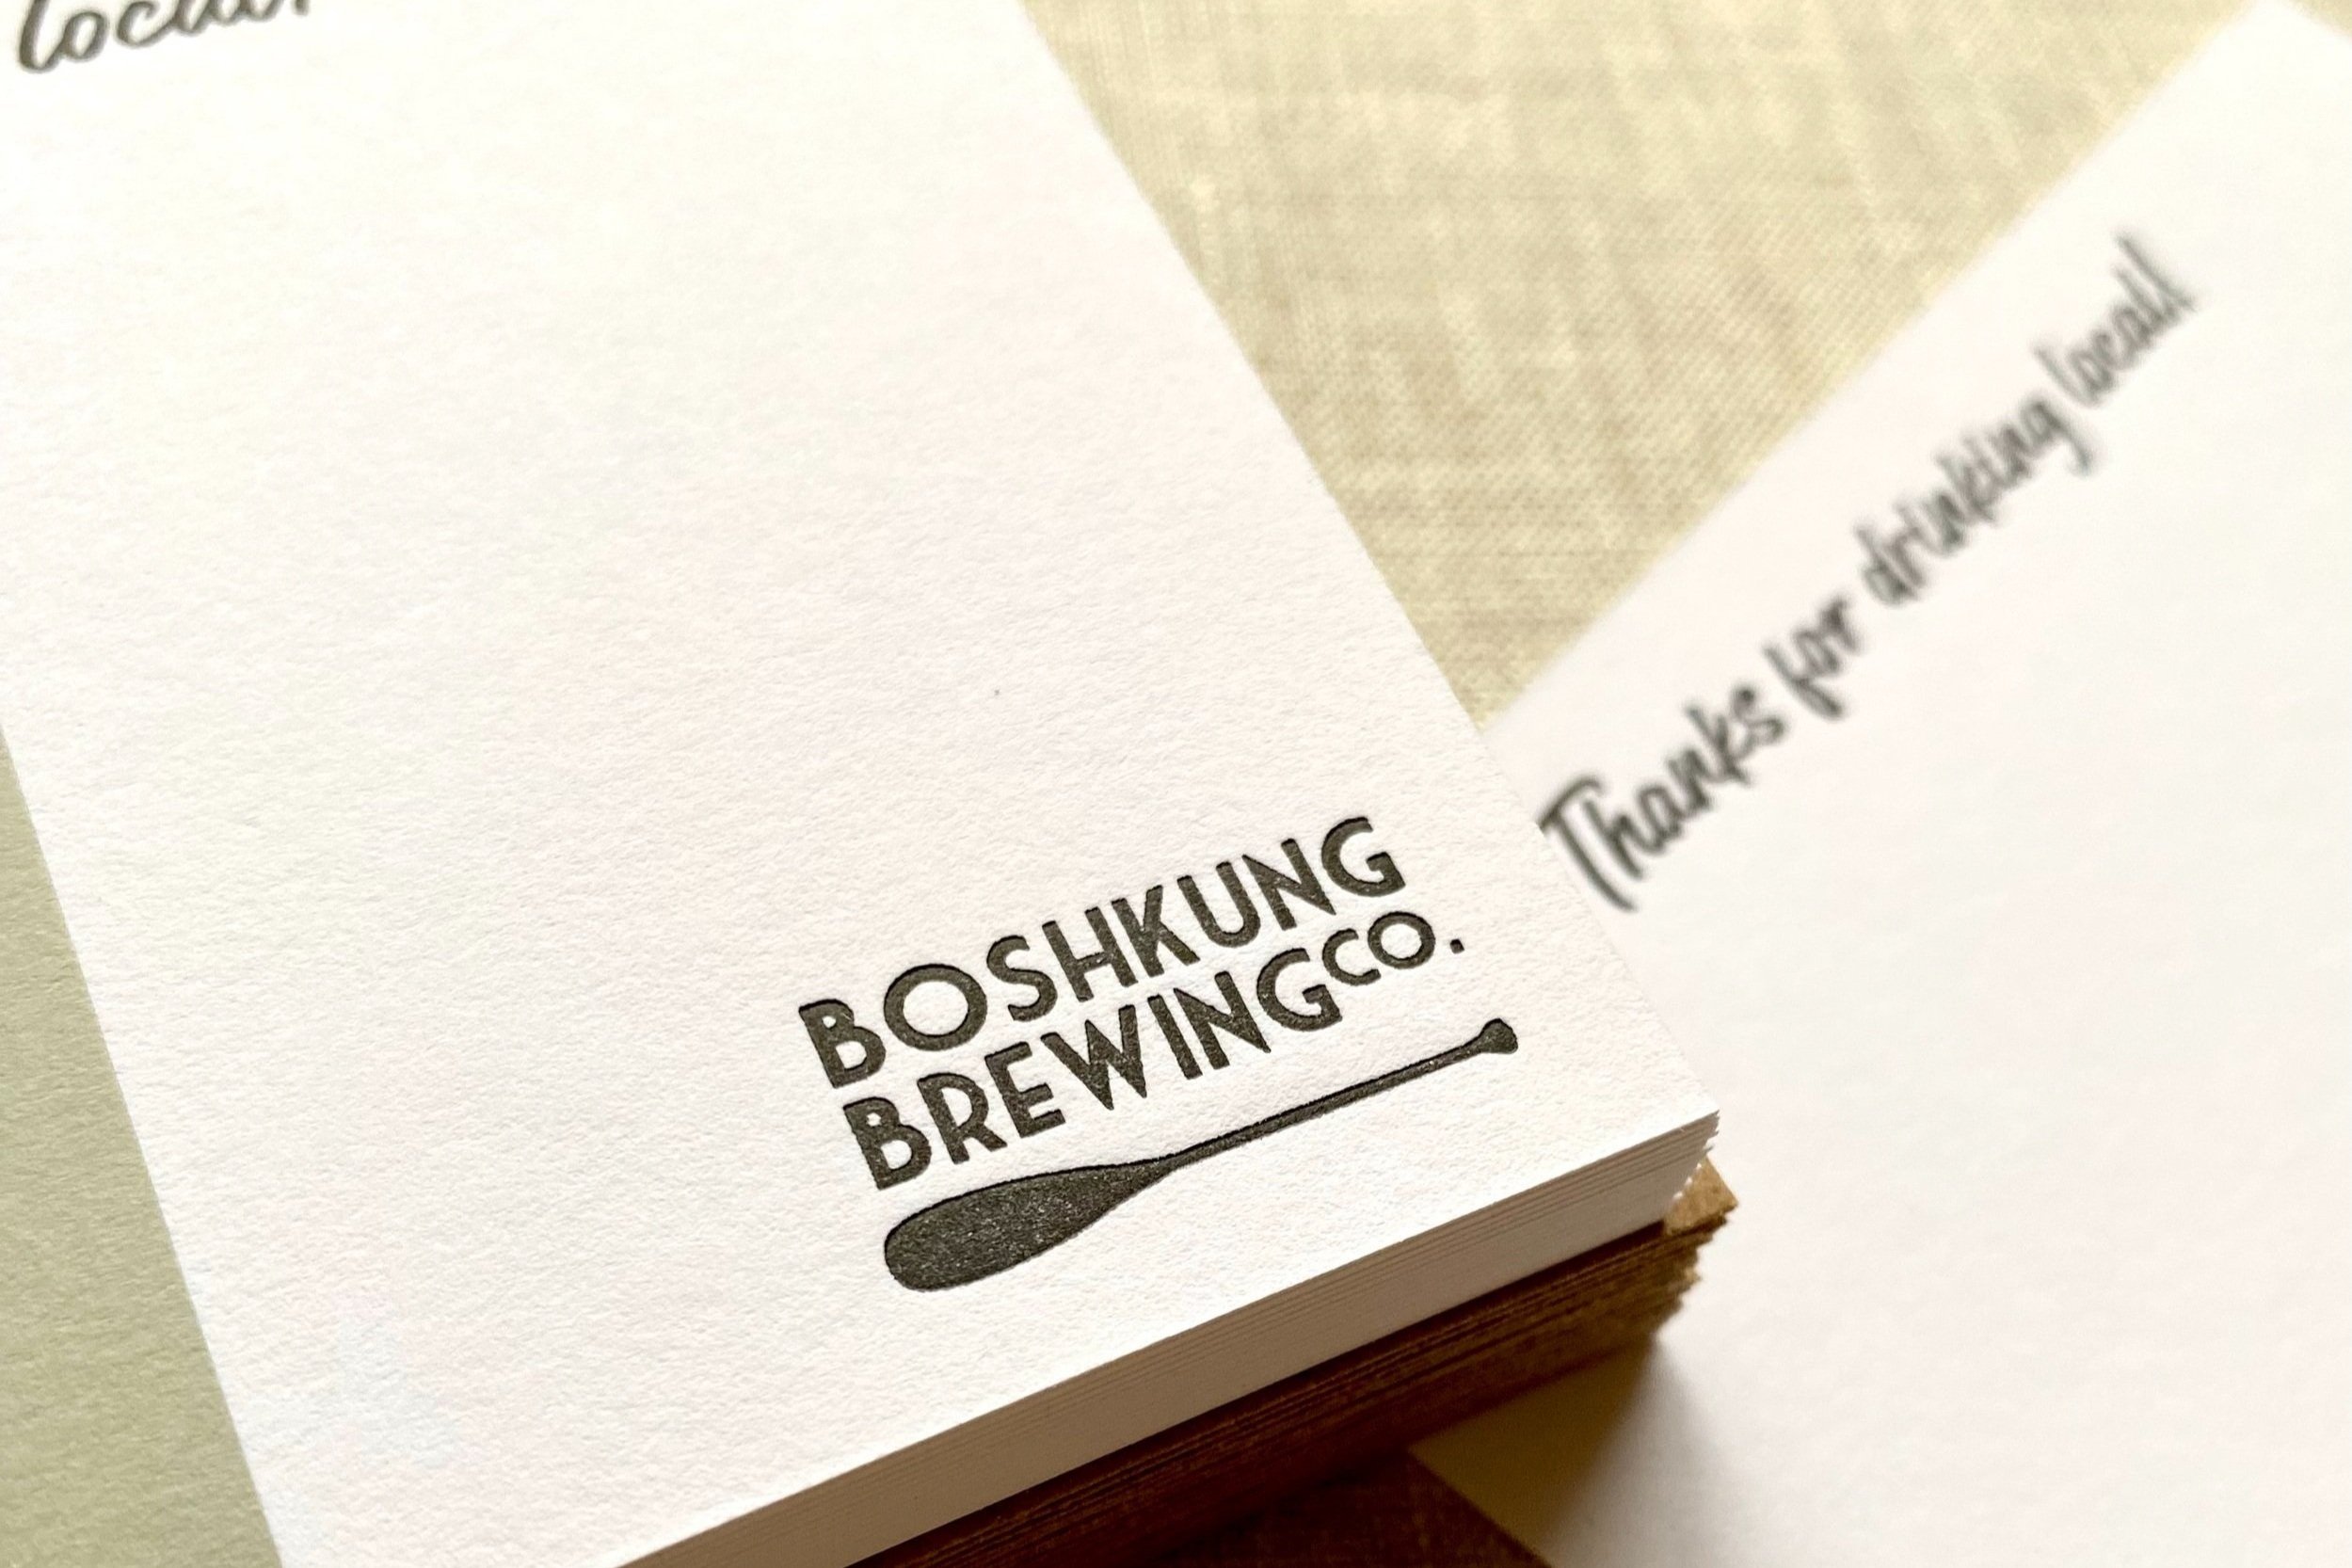 custom-letterpress-printing-business-notecard-with-logo-naebr-design